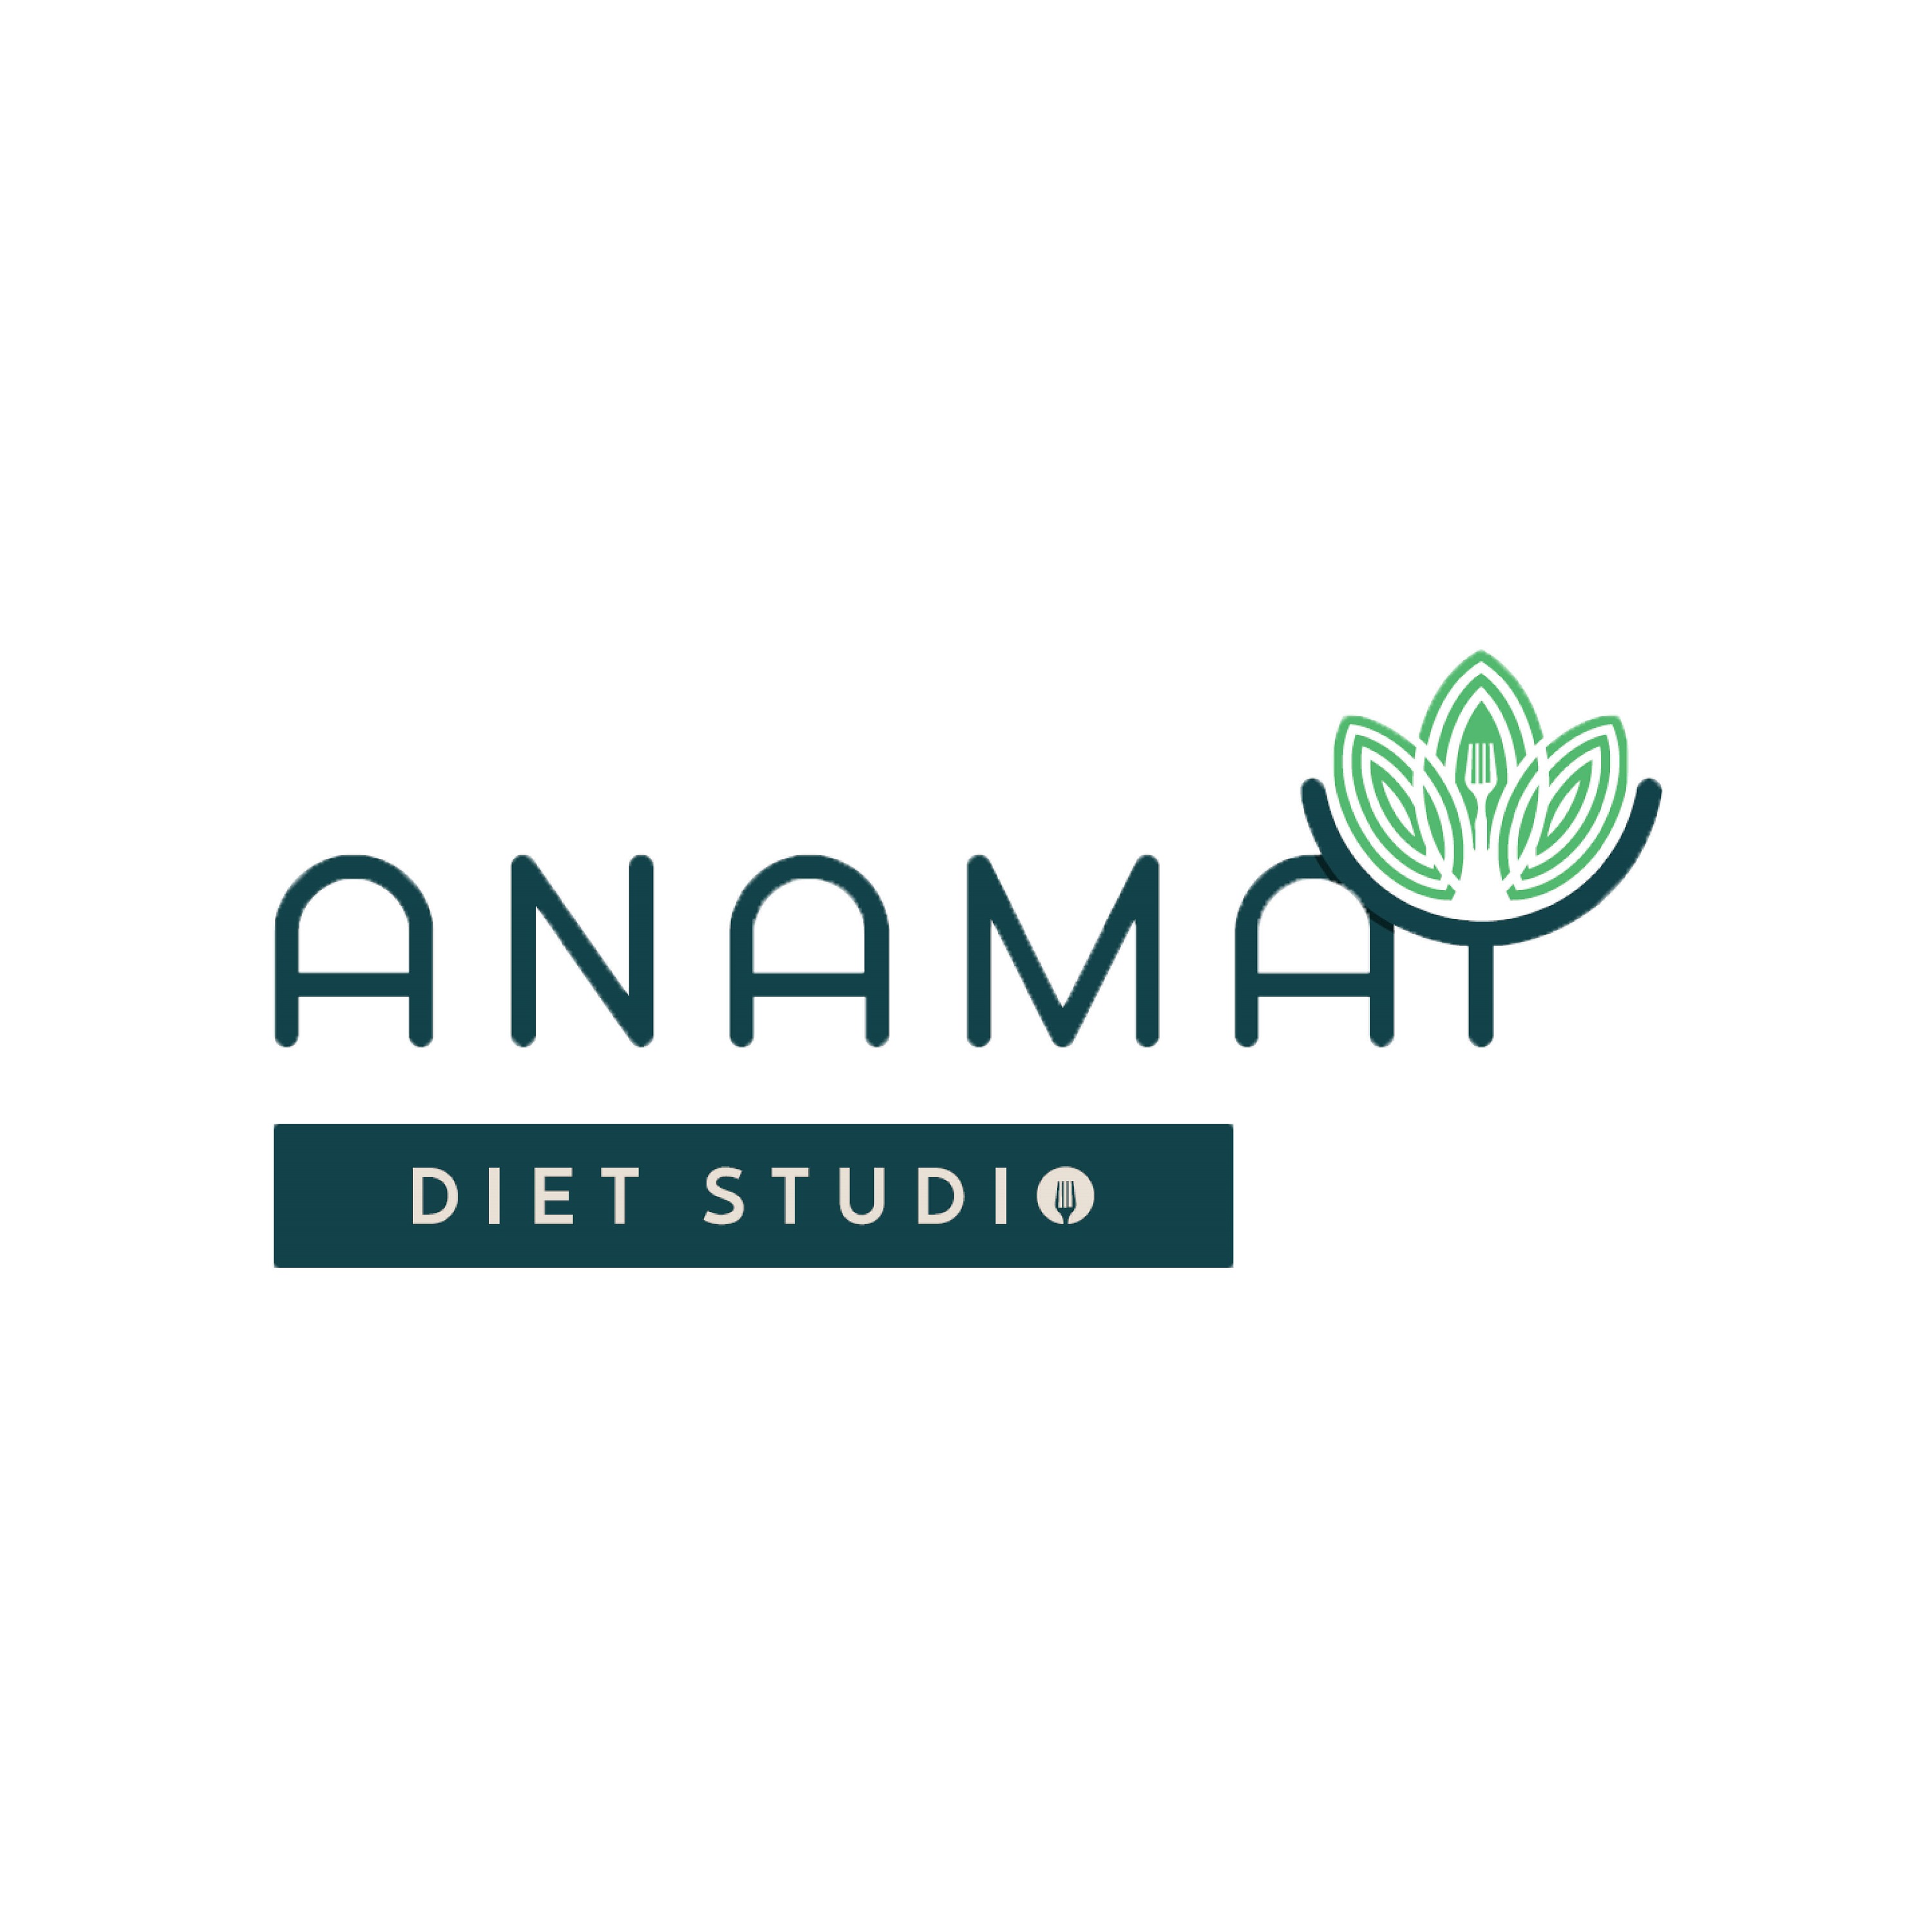 Anamay Diet Studio|Diagnostic centre|Medical Services